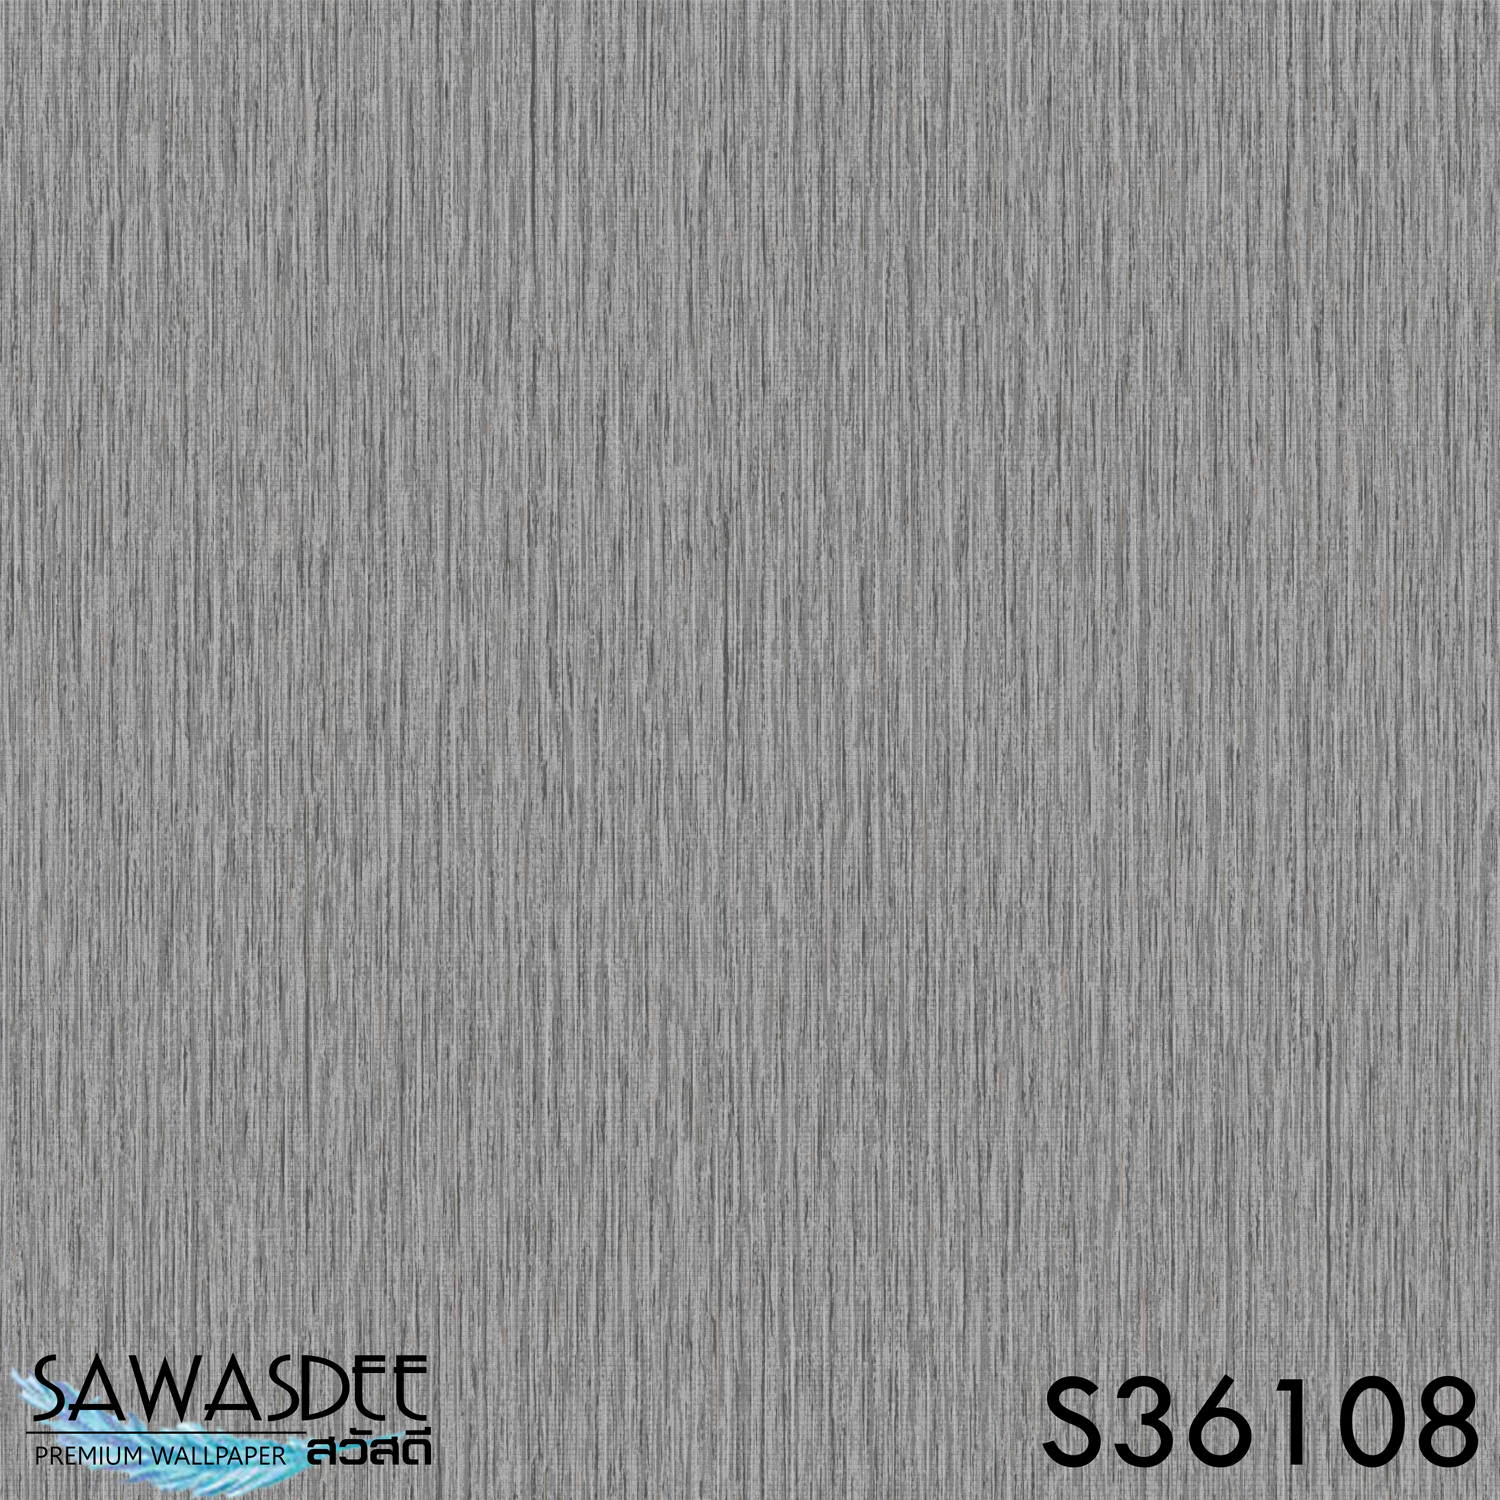 Wallpaper (SAWASDEE) S36108